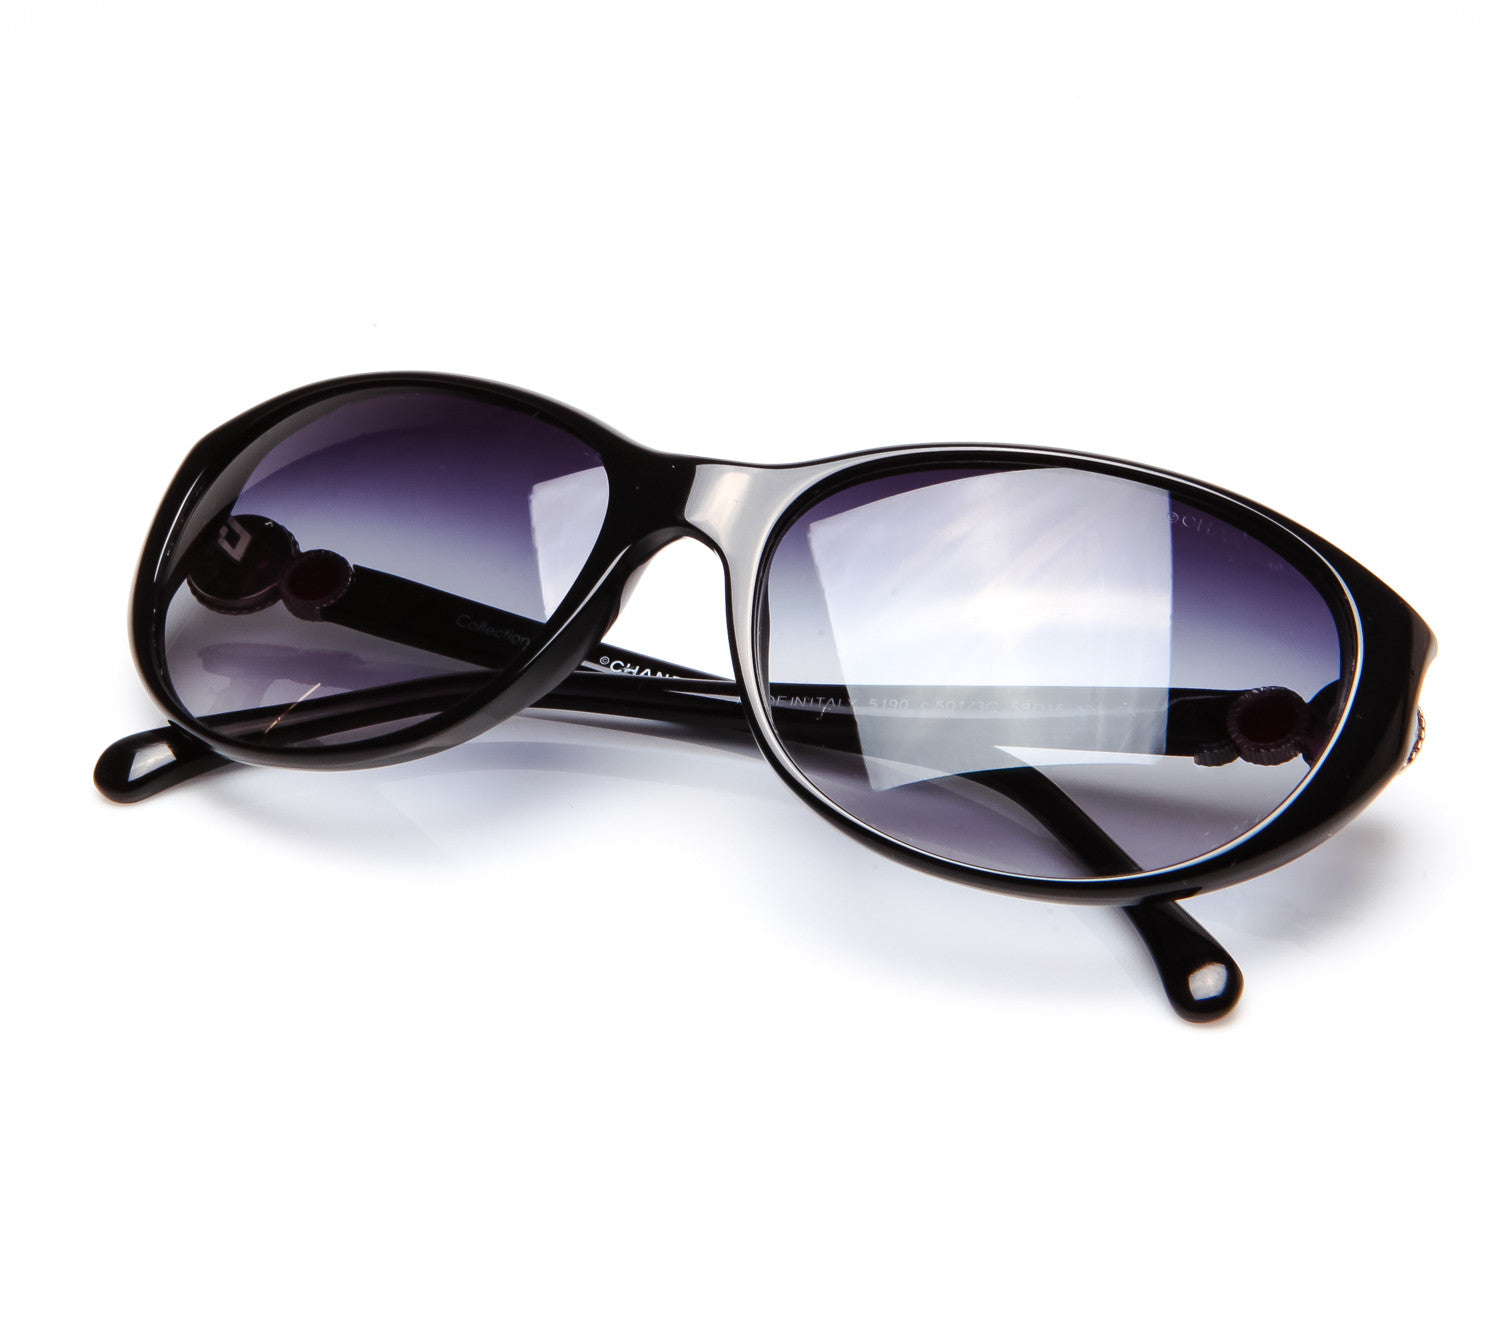 Chanel Designer Sunglasses 6016-501 in Black with Grey Lens - Speert  International